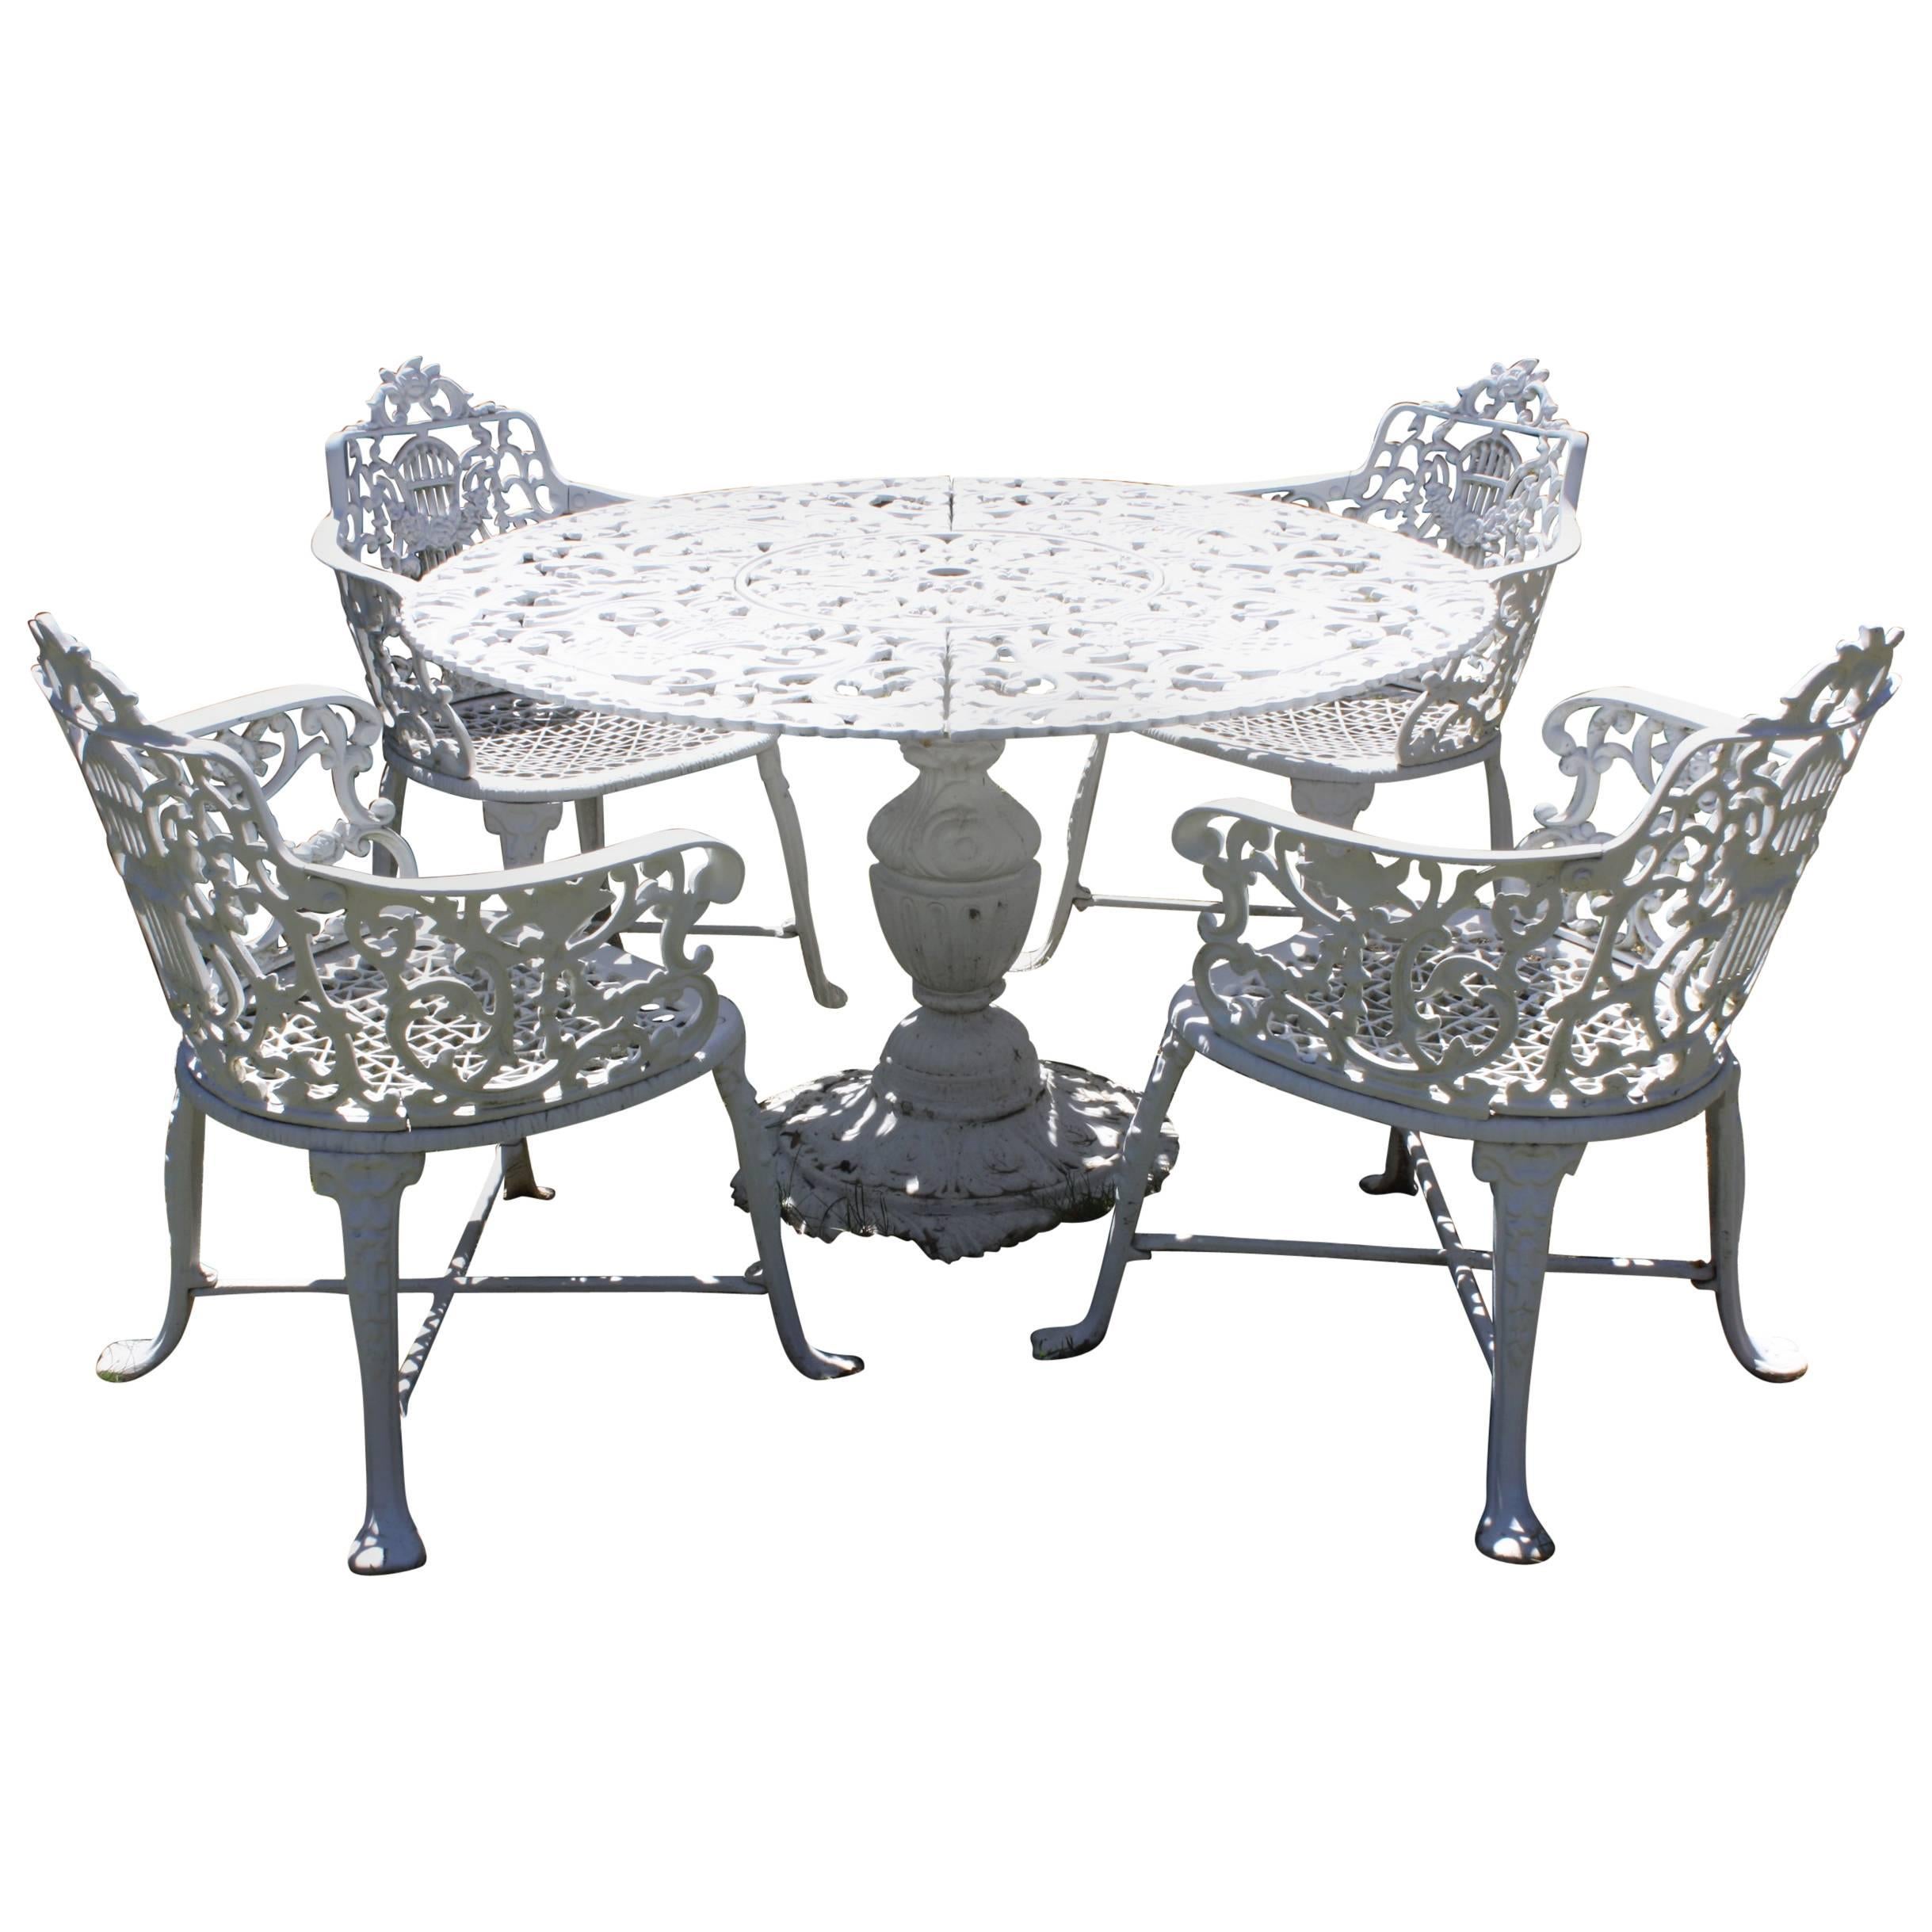 Ornate Victorian Style Garden Dining Set in Cast Aluminum